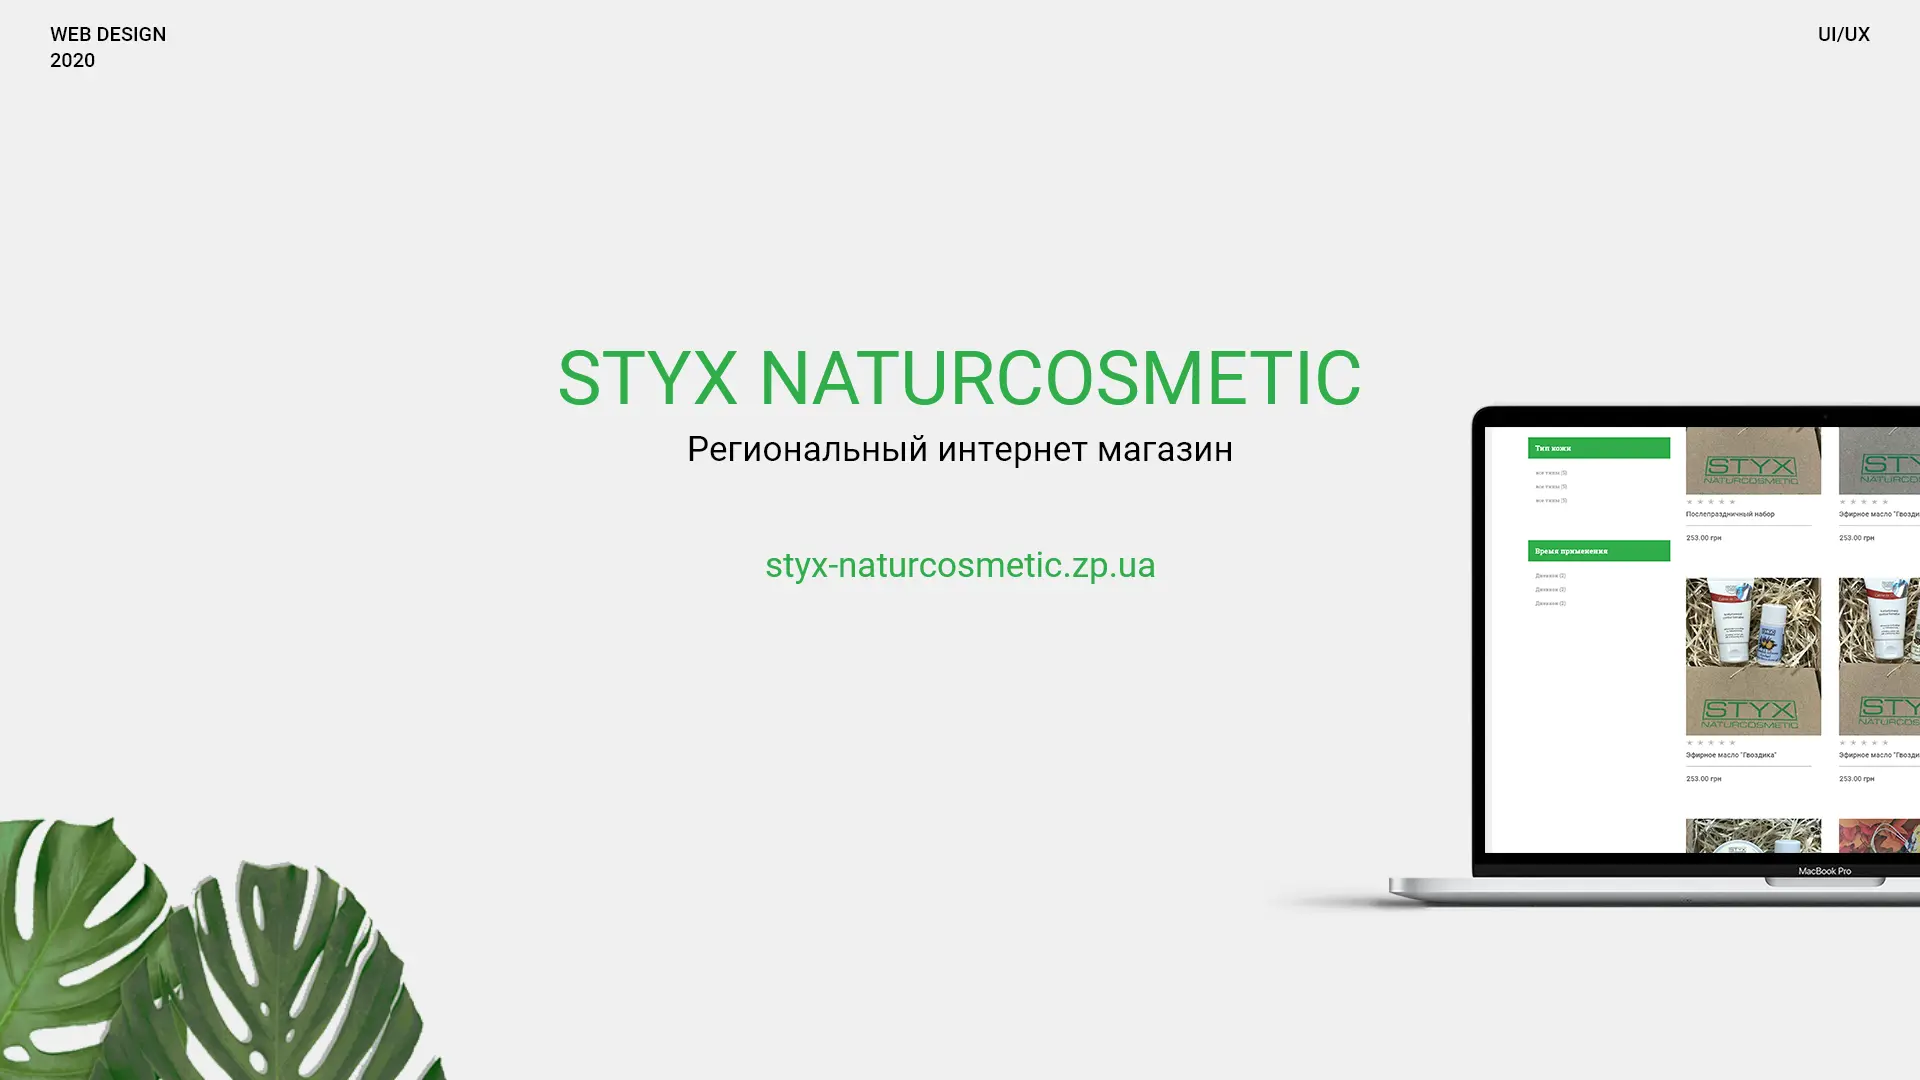 Styx Naturcosmetic Website Design